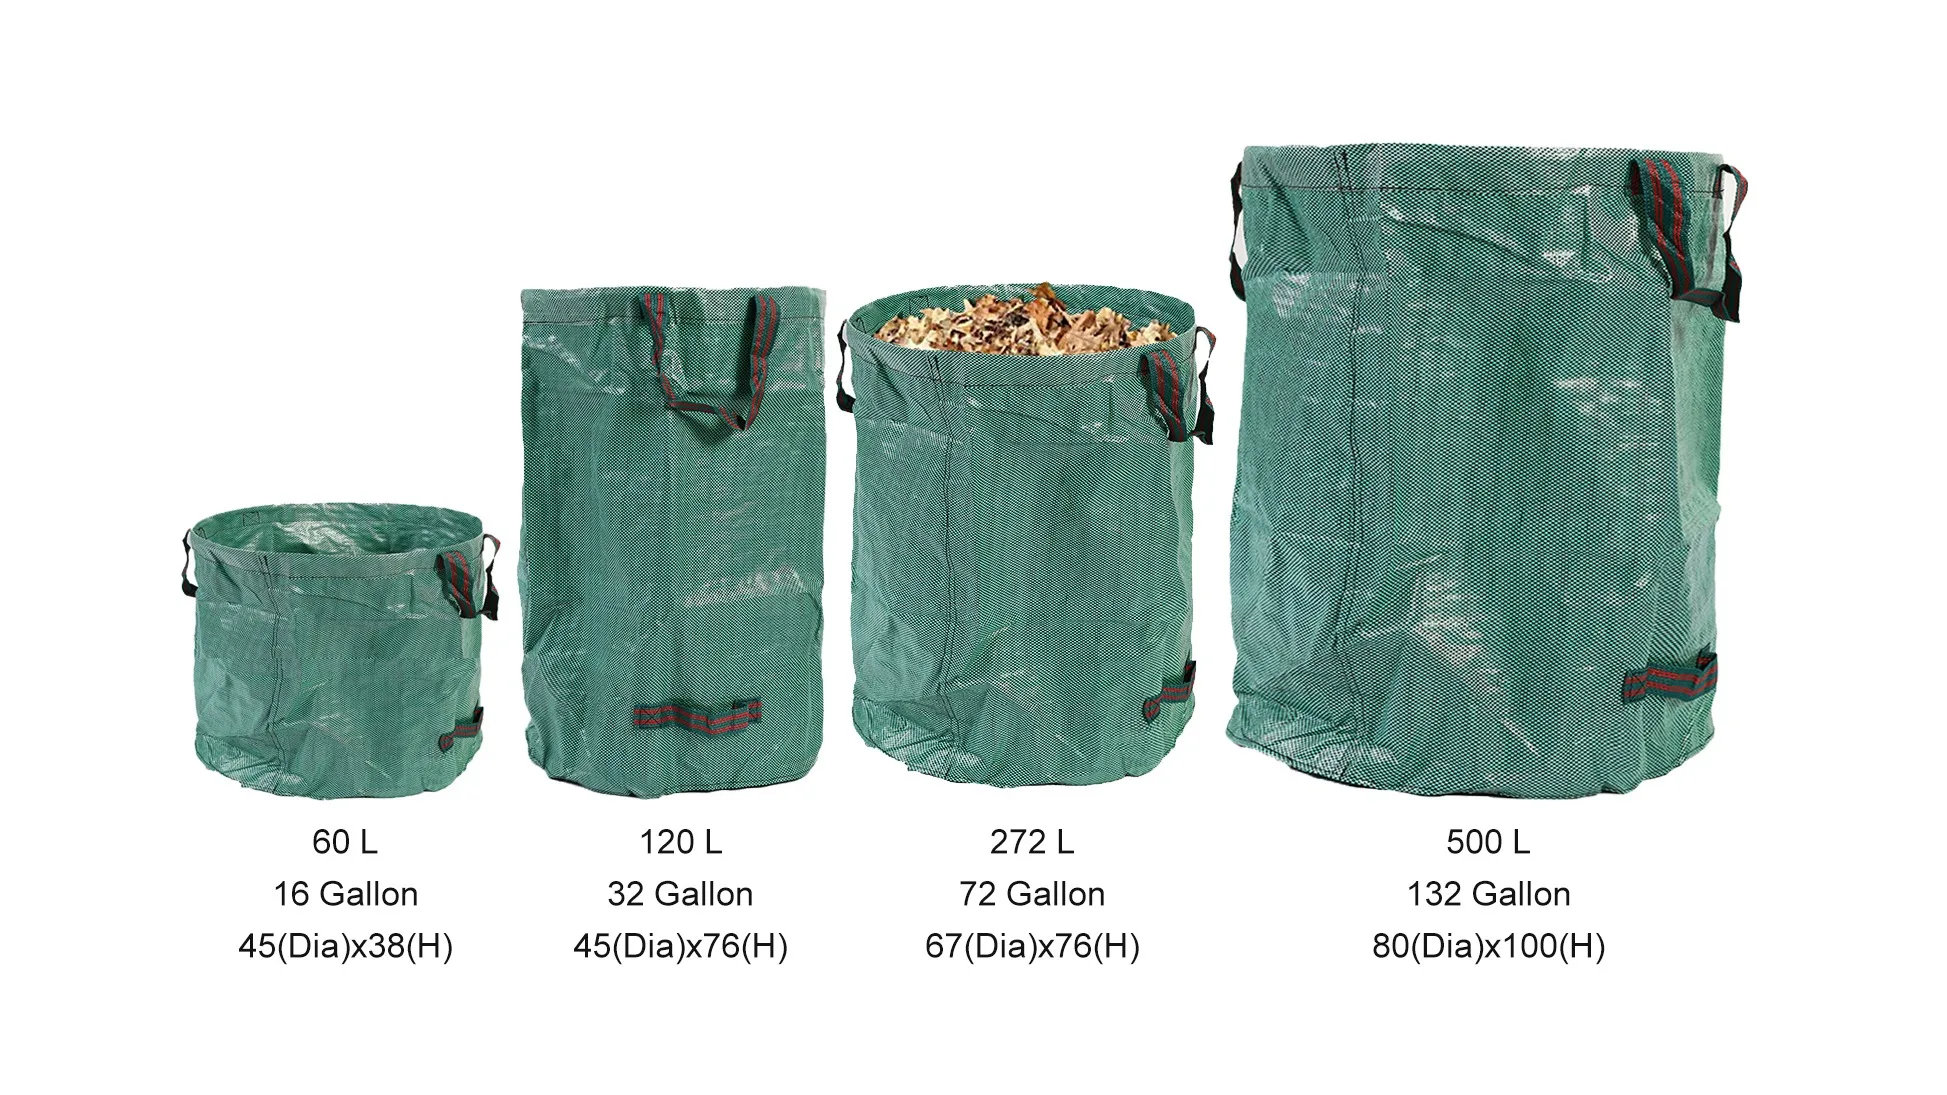 72 Gallon Reusable Garden Waste Bags Waterproof Leaf Lawn Trash Bags US